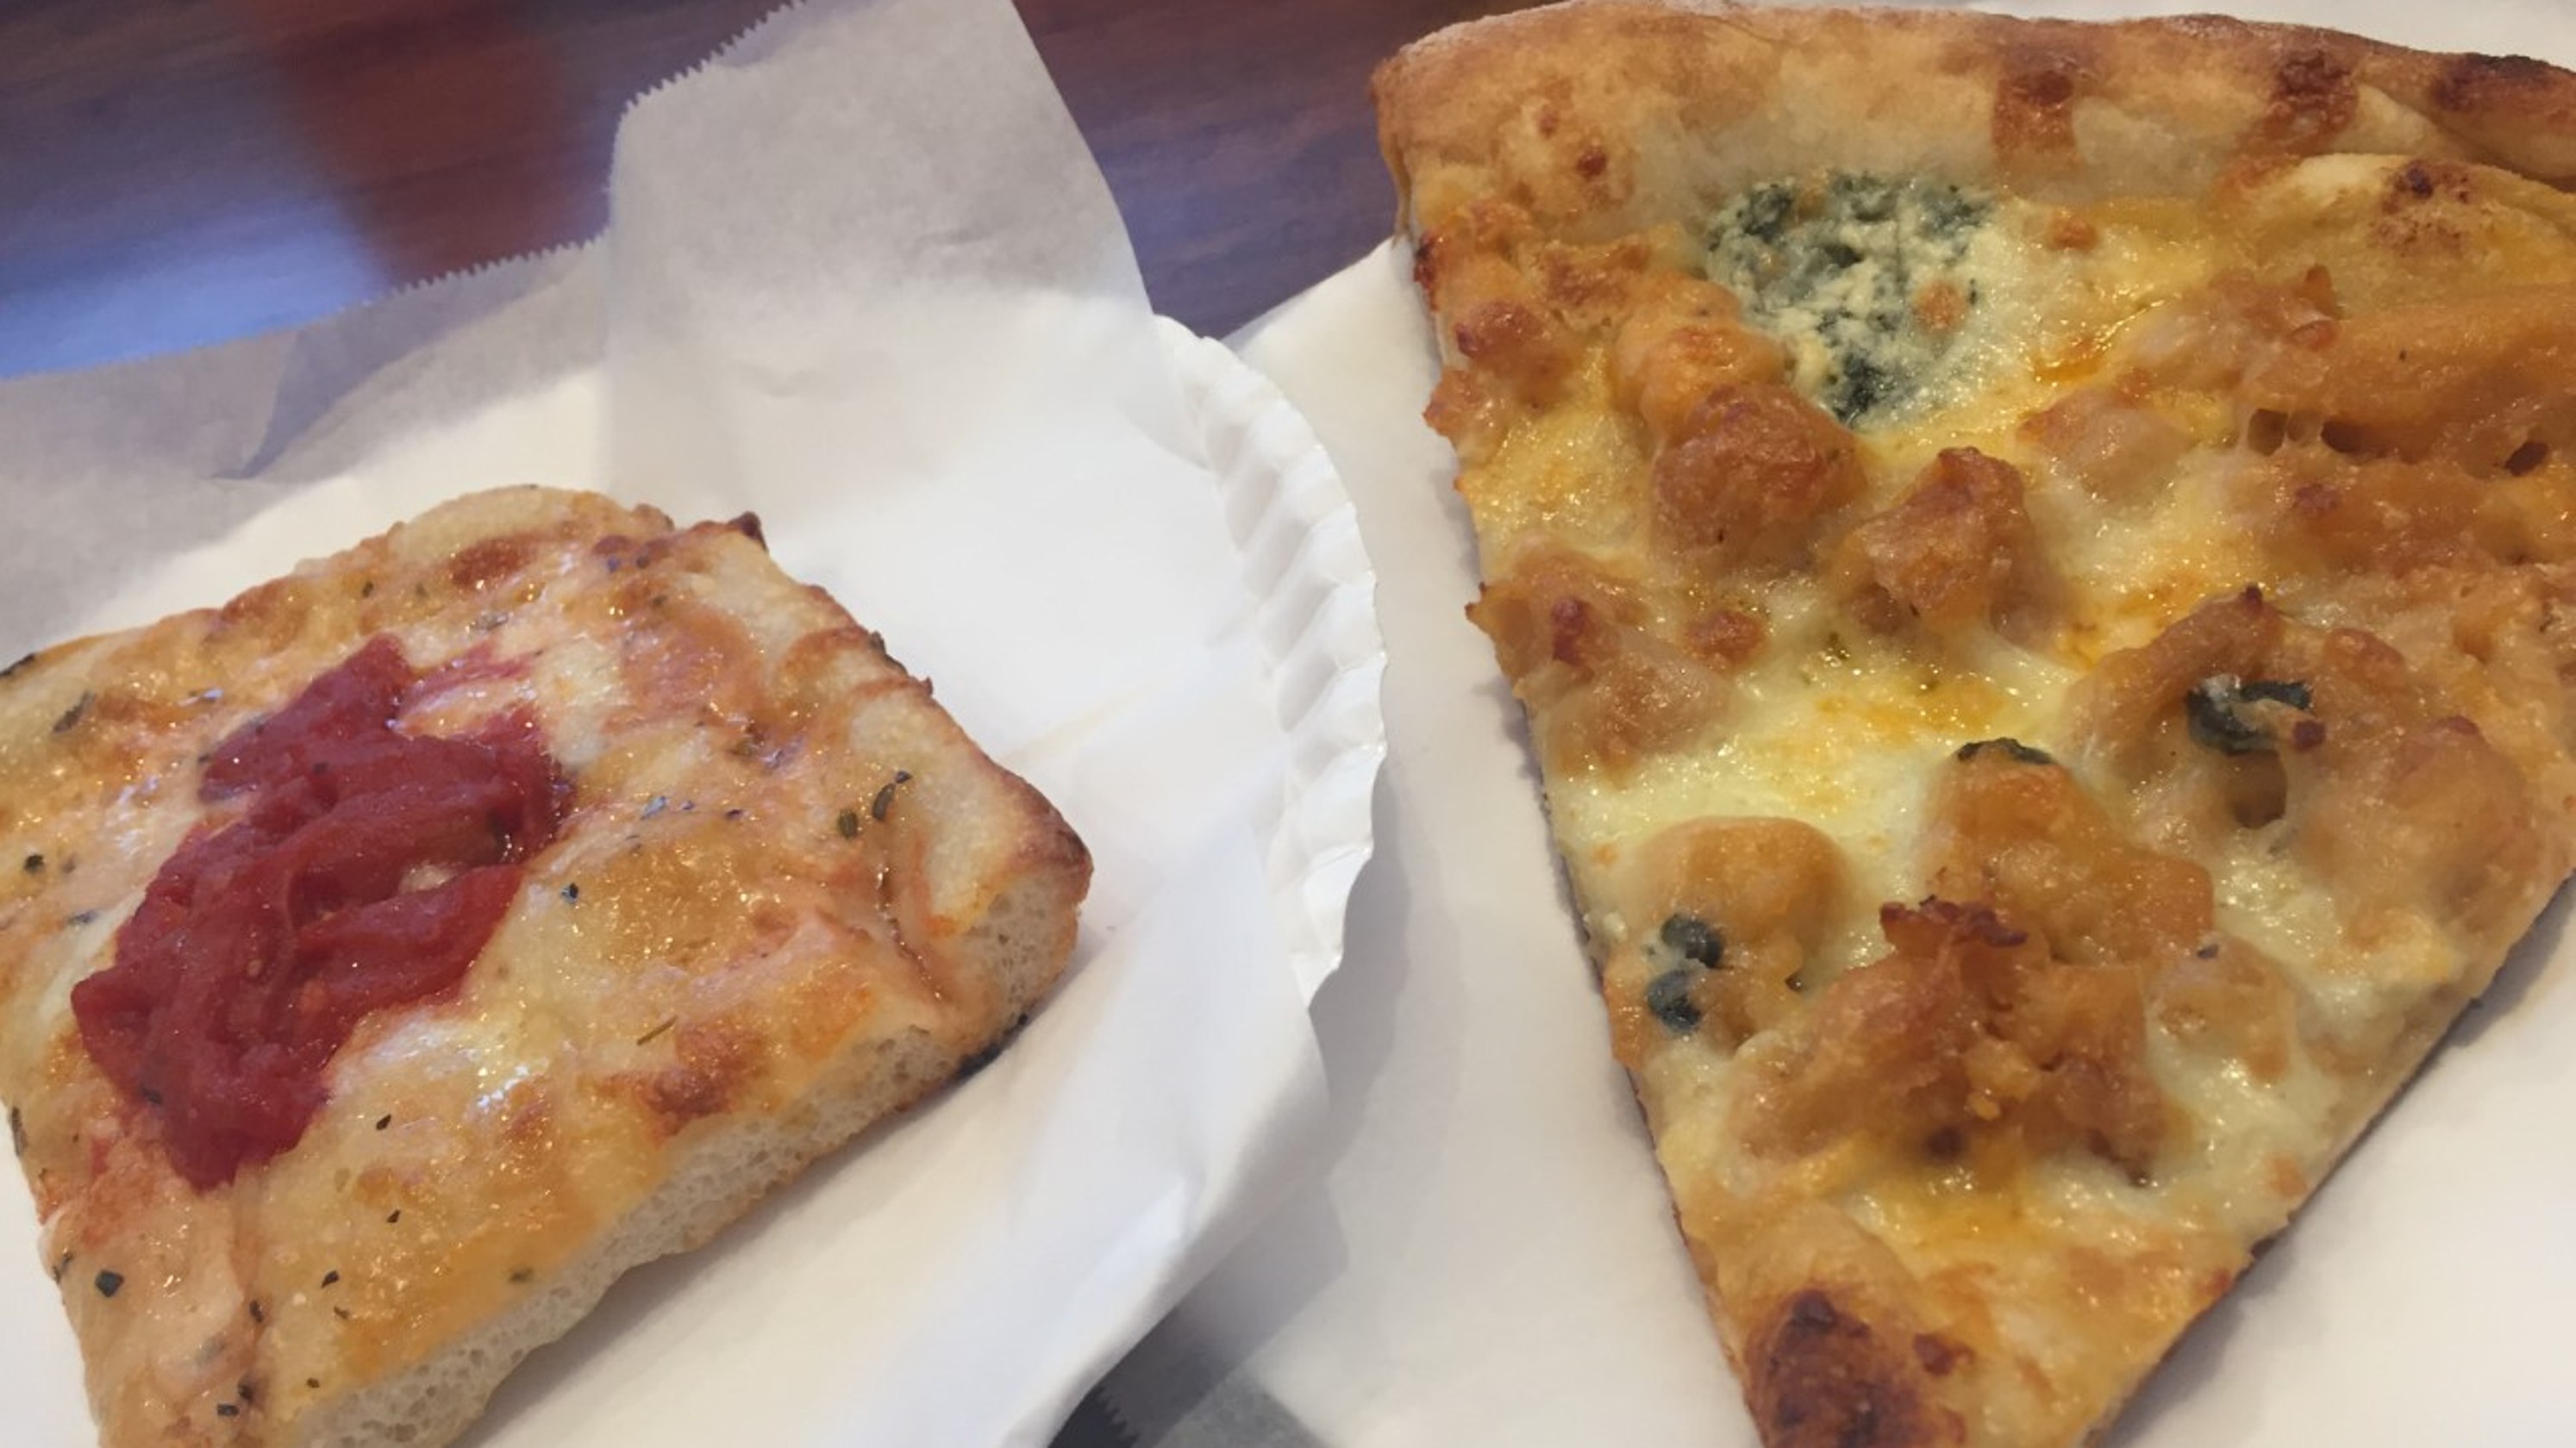 Jaboni’s Pizzeria brings New York-style Italian food to Maryville